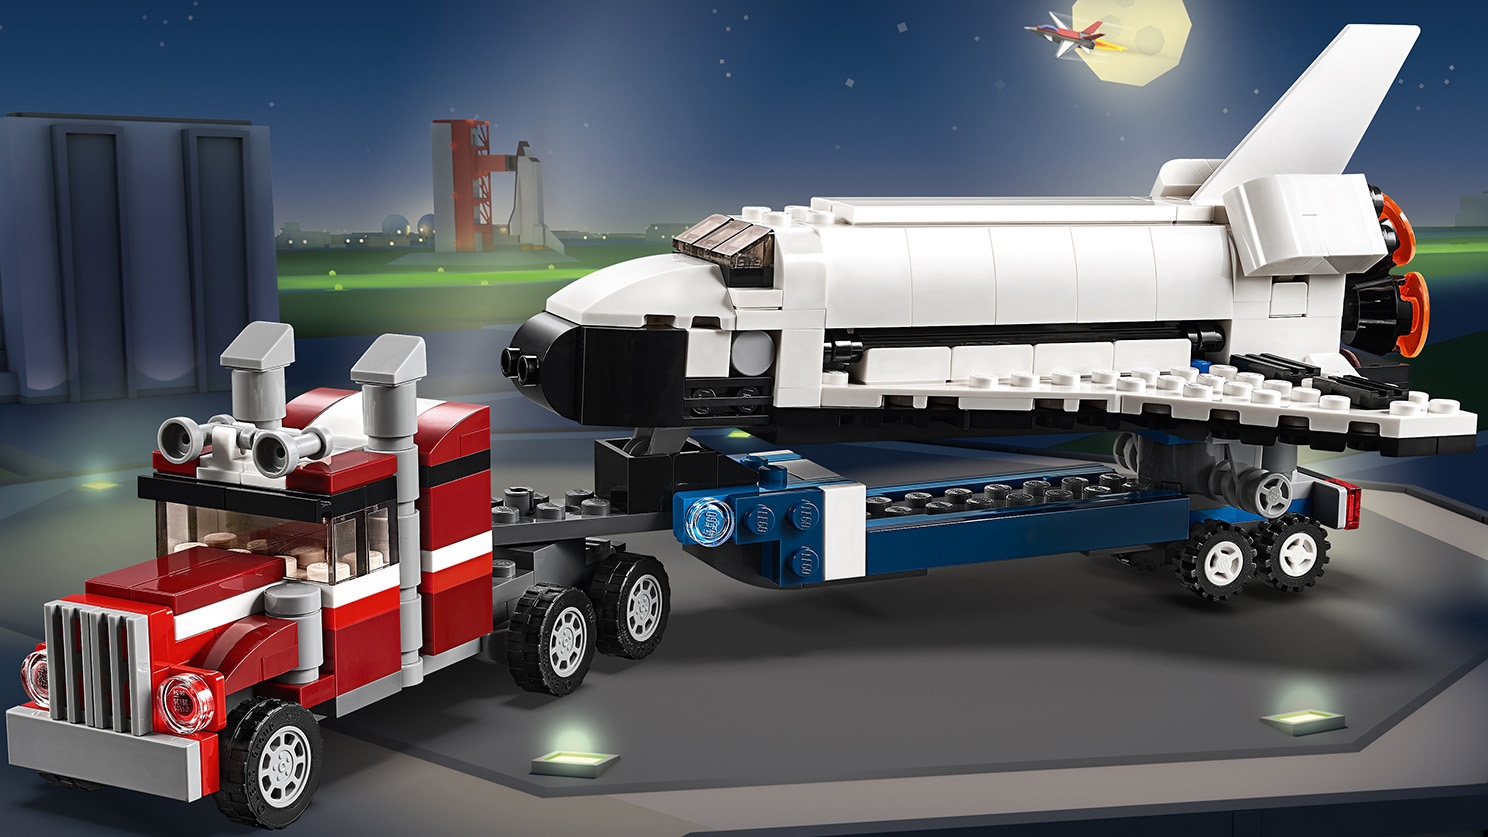 31091 LEGO Shuttle Transporter LEGO Creator for sale online